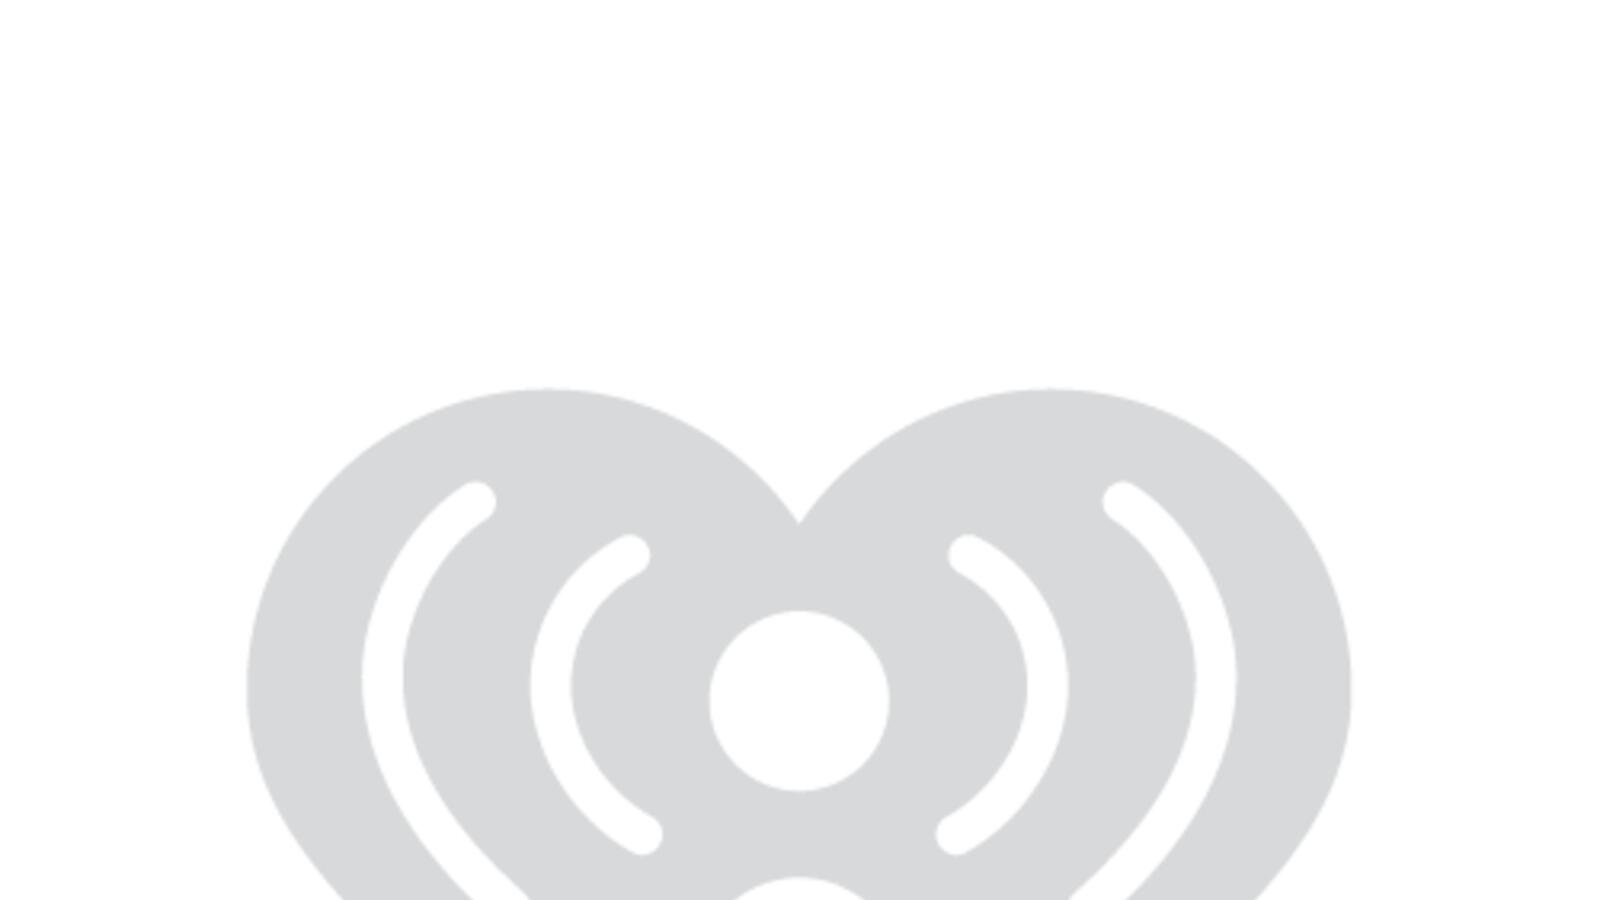 The Bill Handel Show [FULL SHOW] - Bill Handel on Demand | iHeartRadio